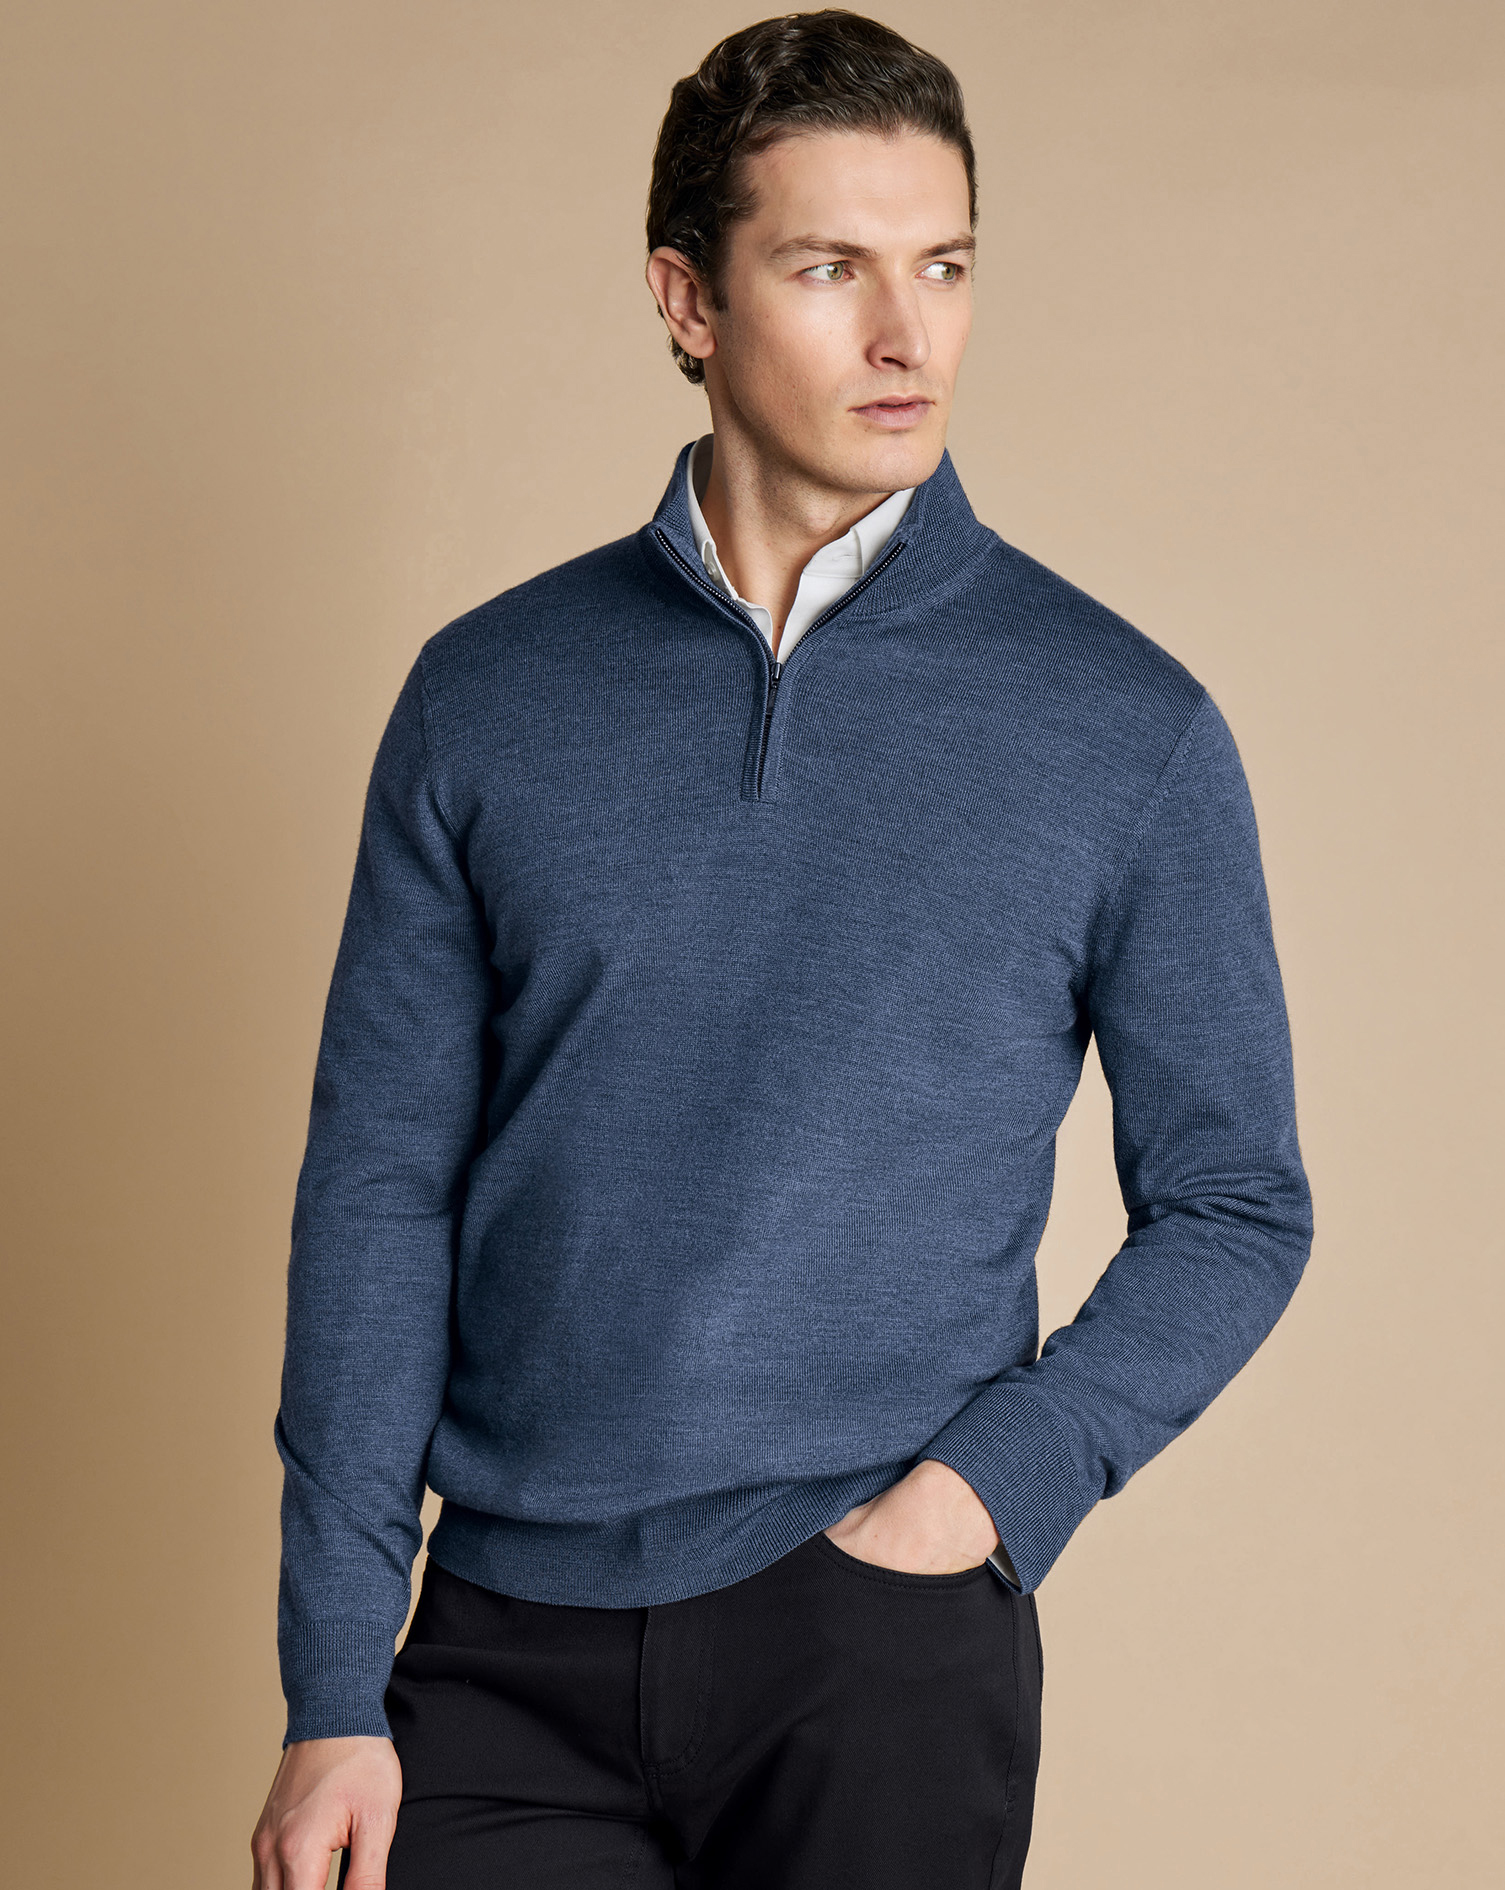 Men's Charles Tyrwhitt Zip Neck Sweater - Indigo Melange Blue Size Large Merino
